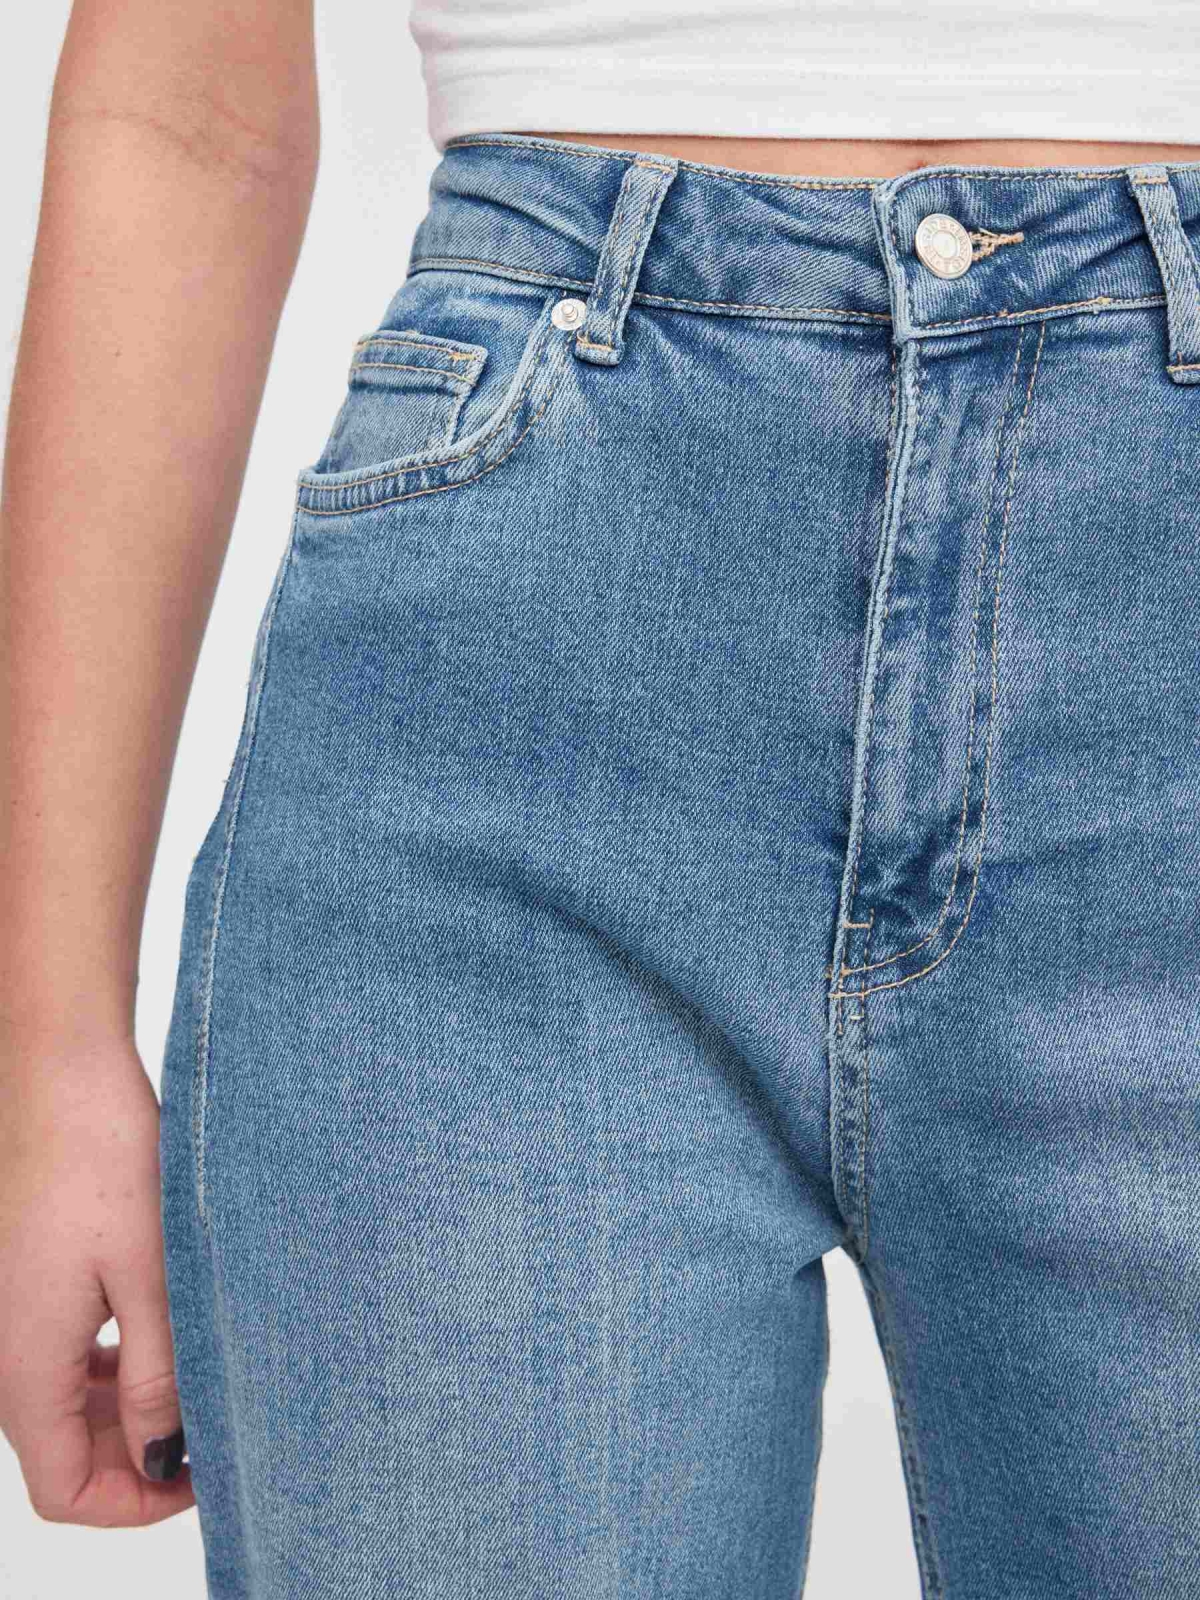 Jeans perna grande pinza azul claro vista detalhe